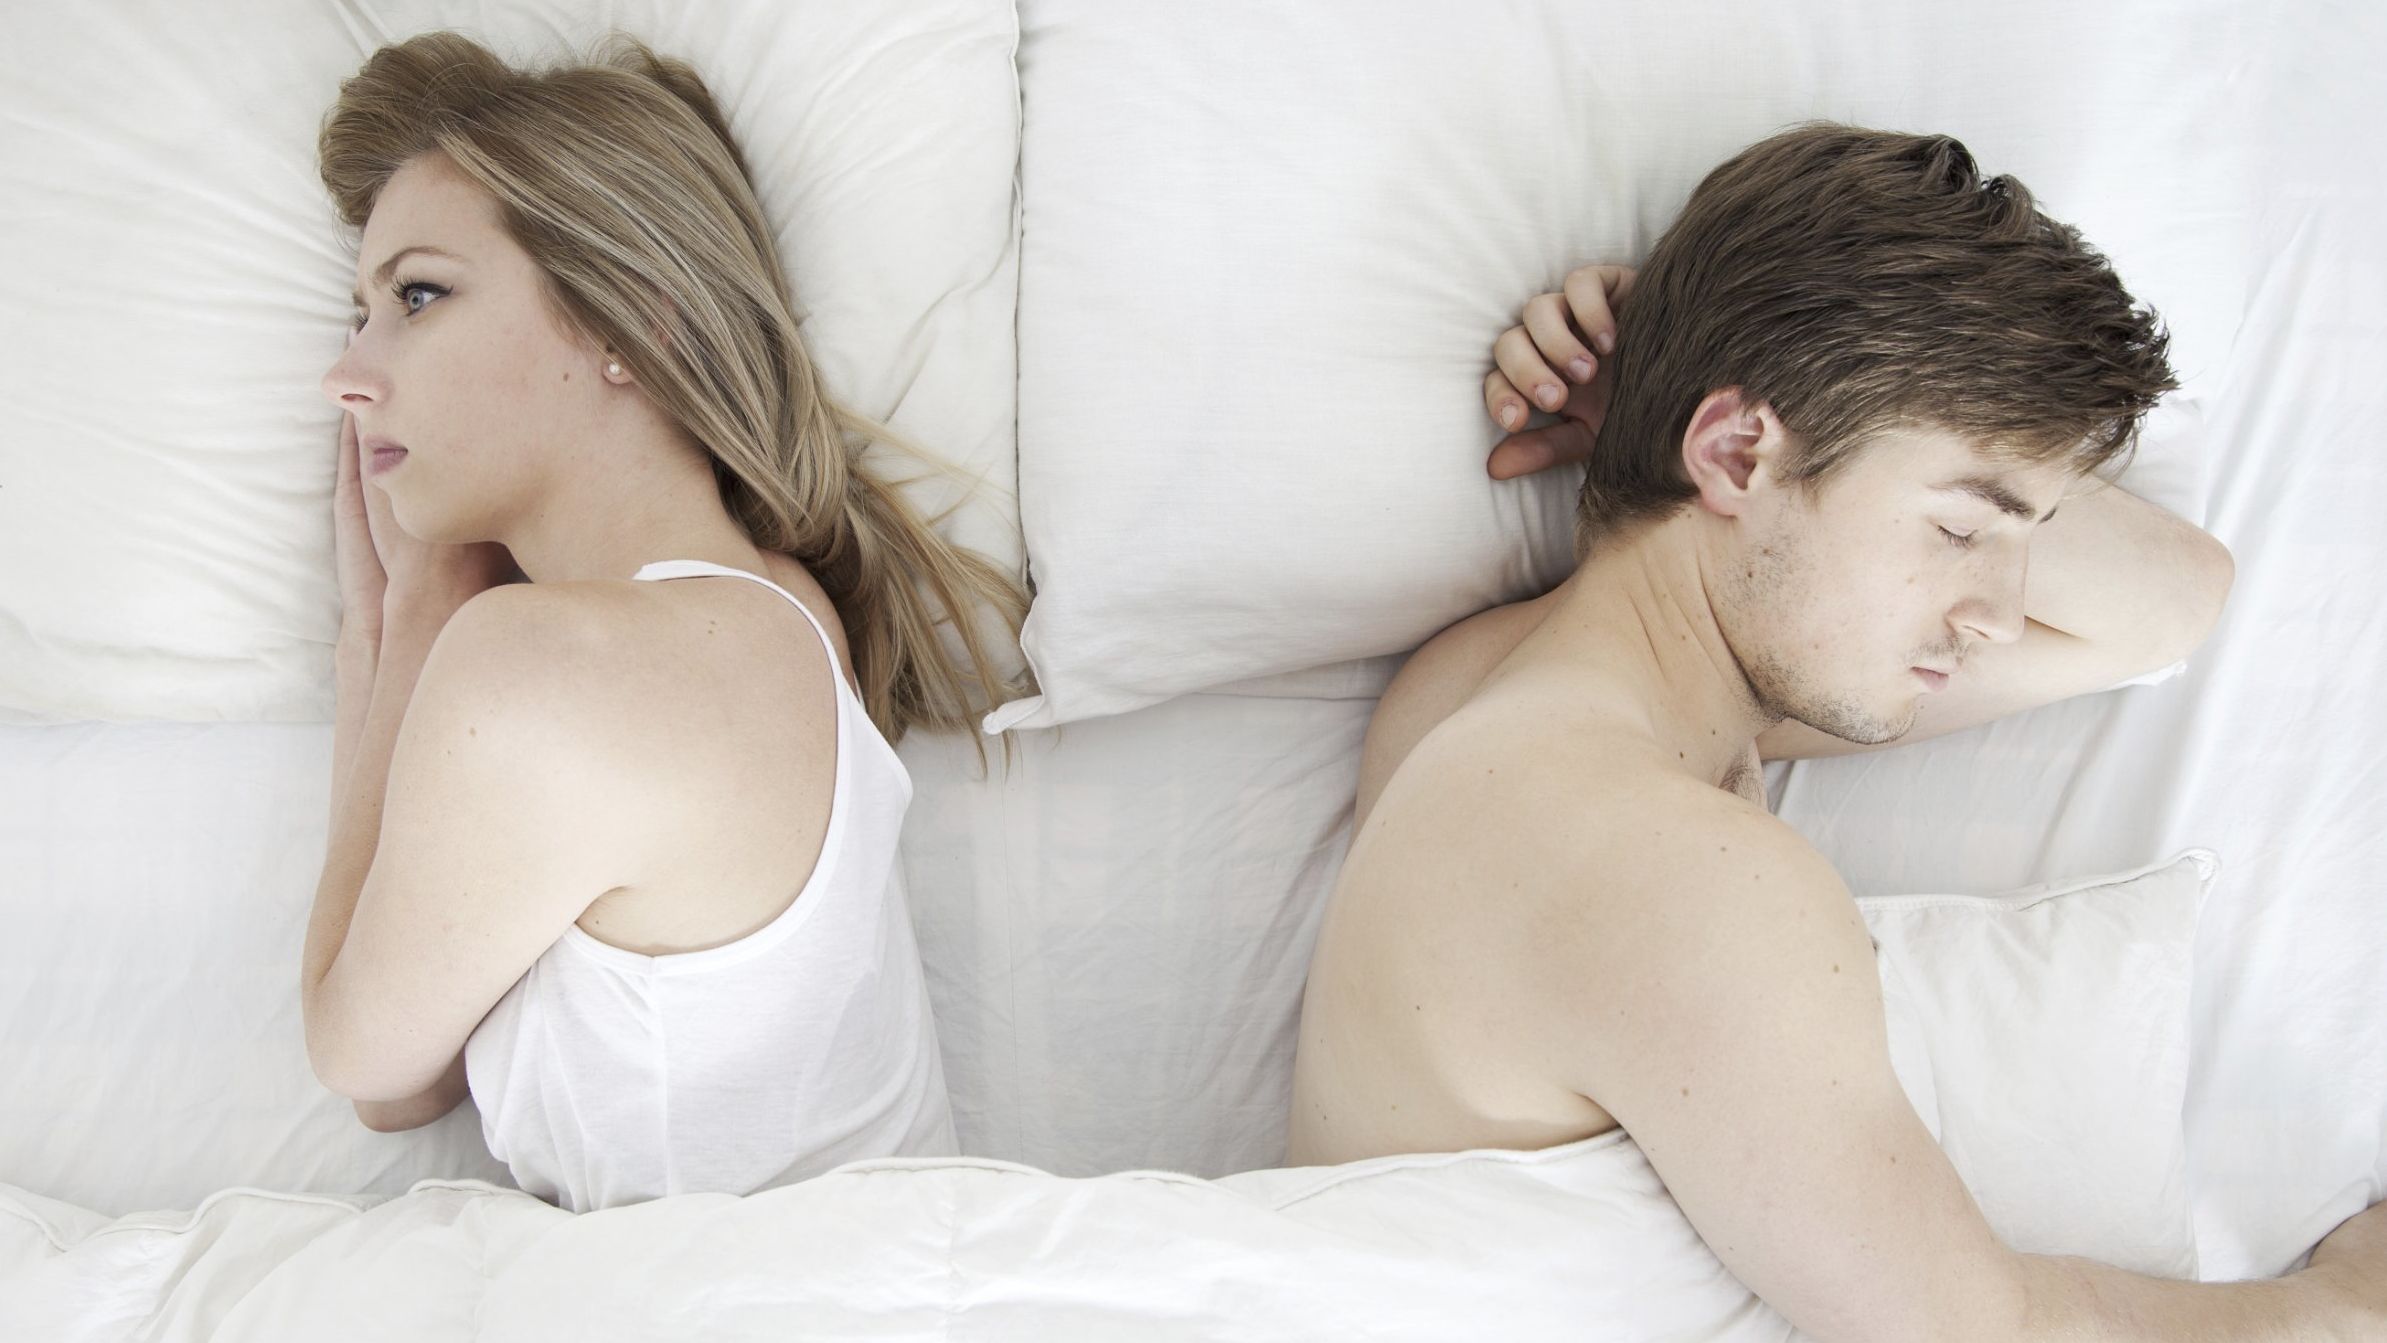 Sleeping Girl Ko Choda - When you and your partner have mismatched libidos | CNN